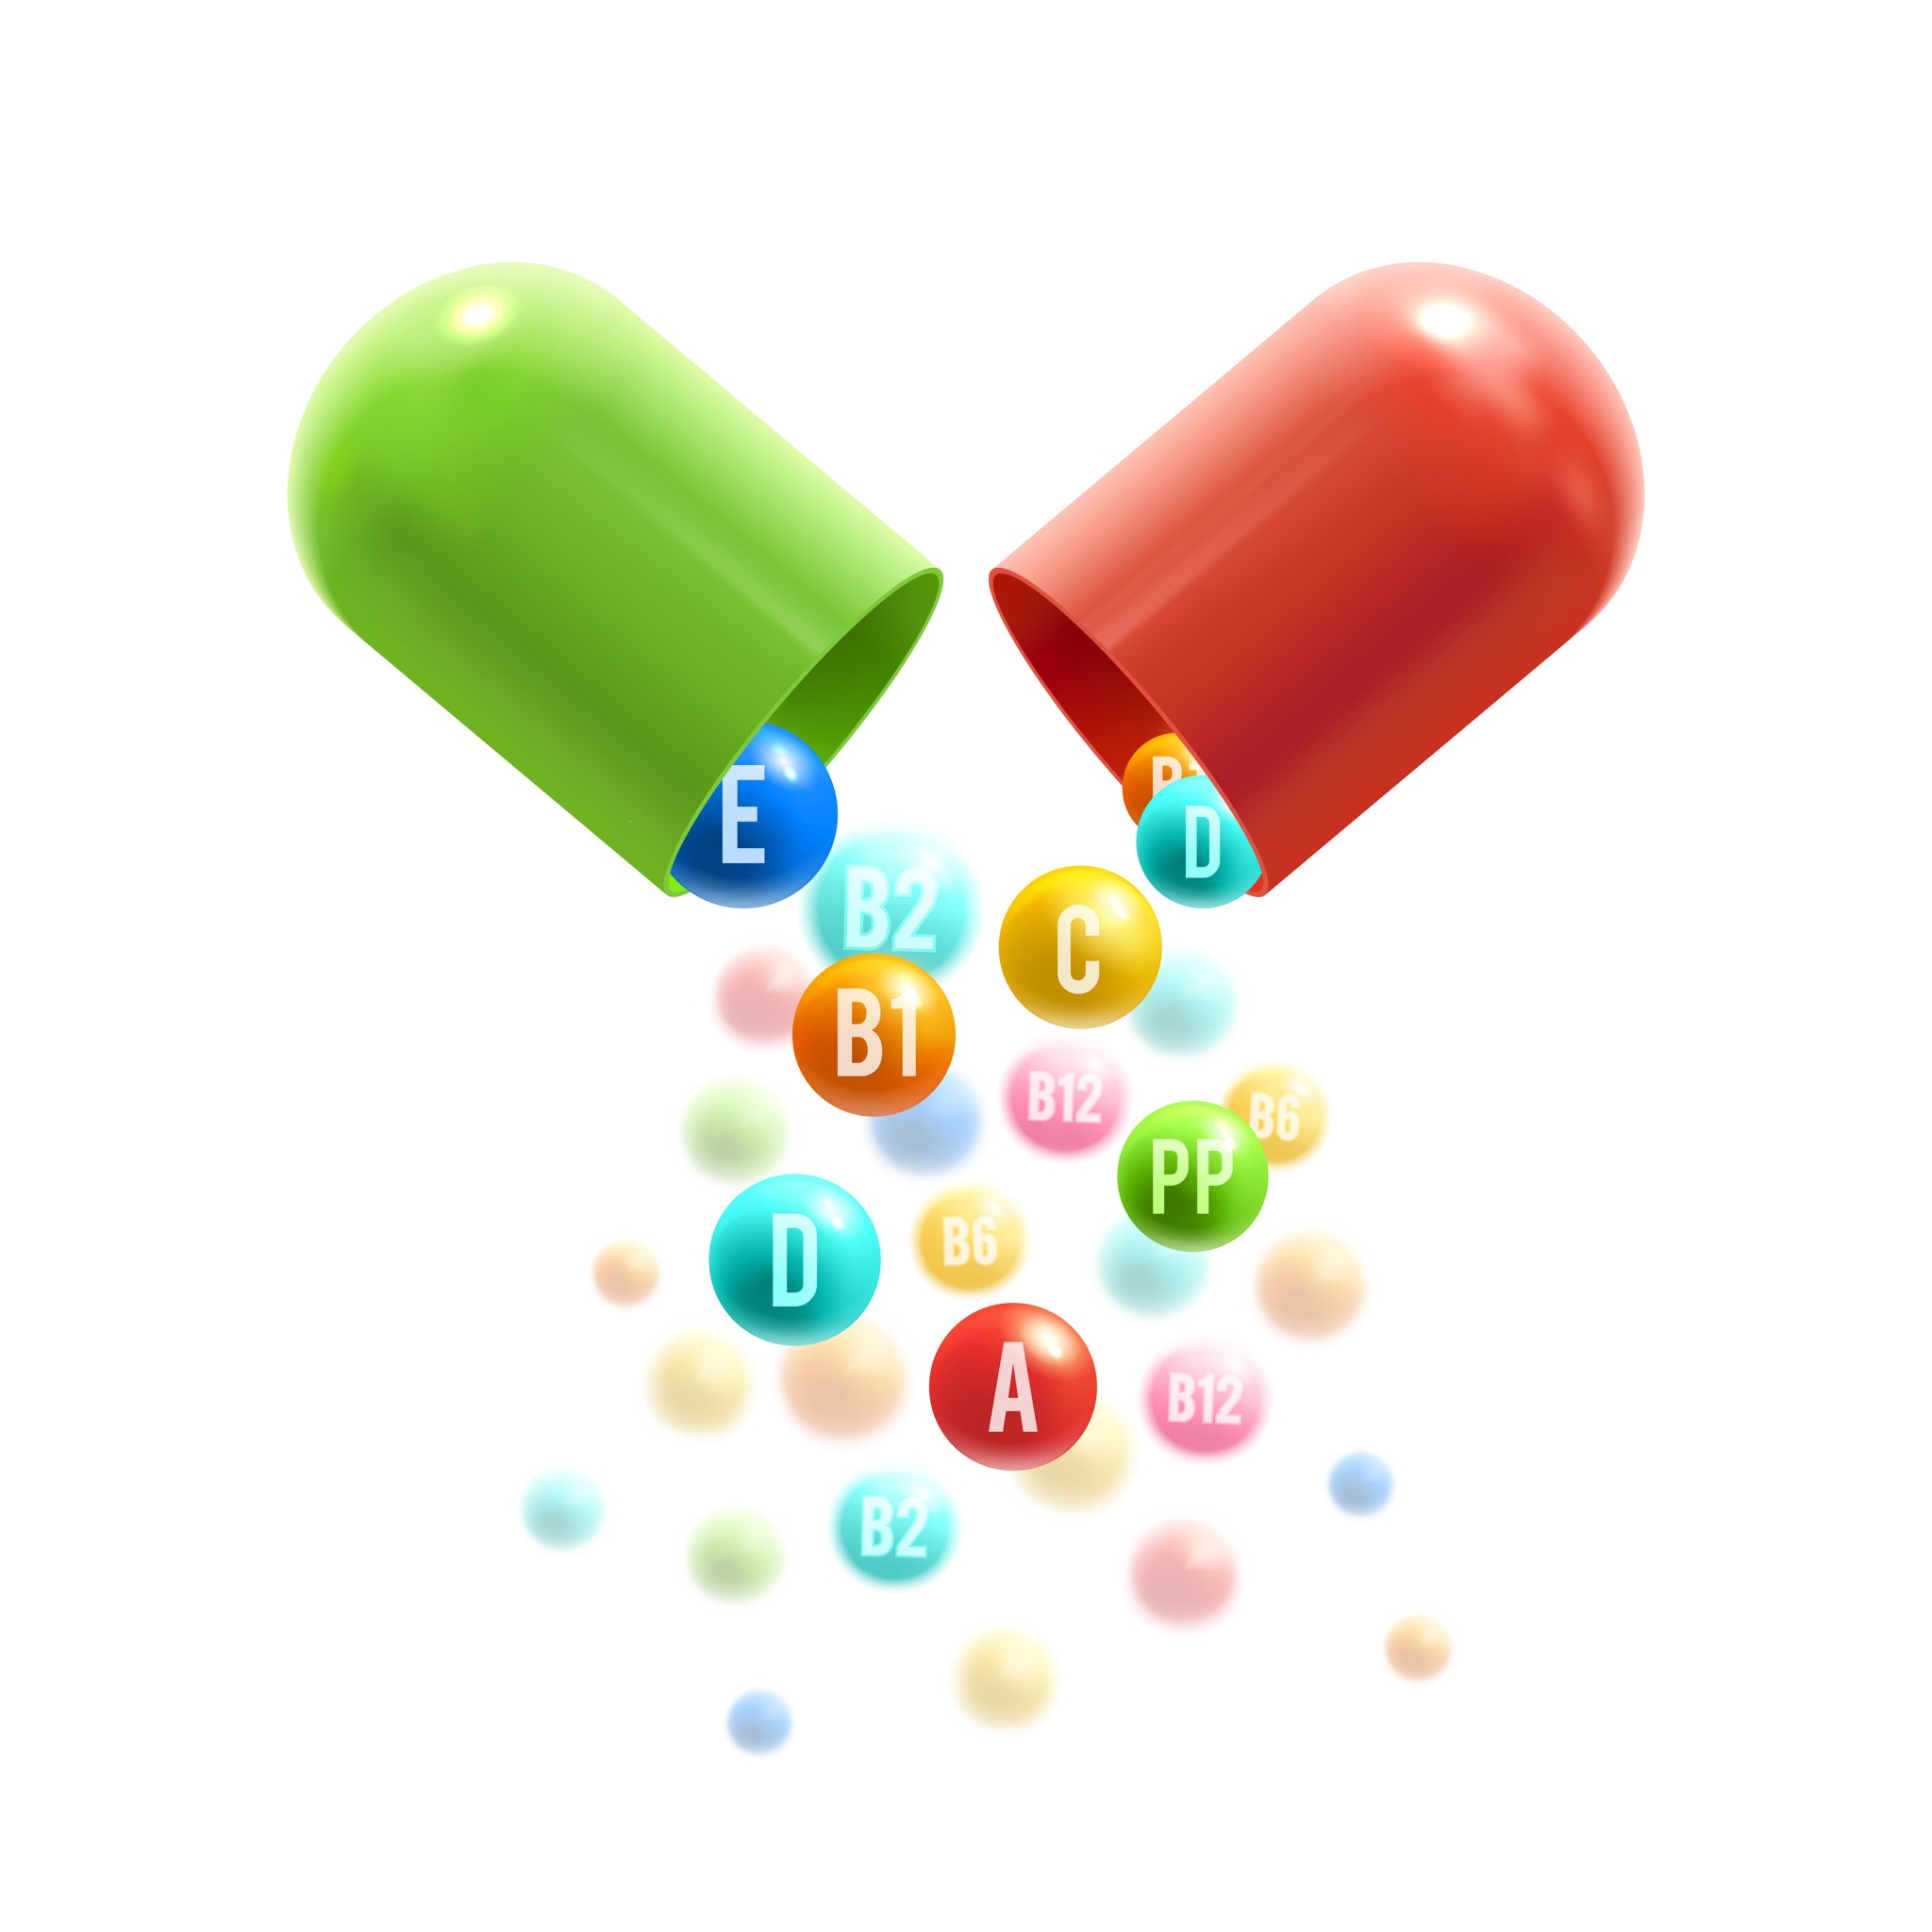 Vitamin capsule and vitamin icons